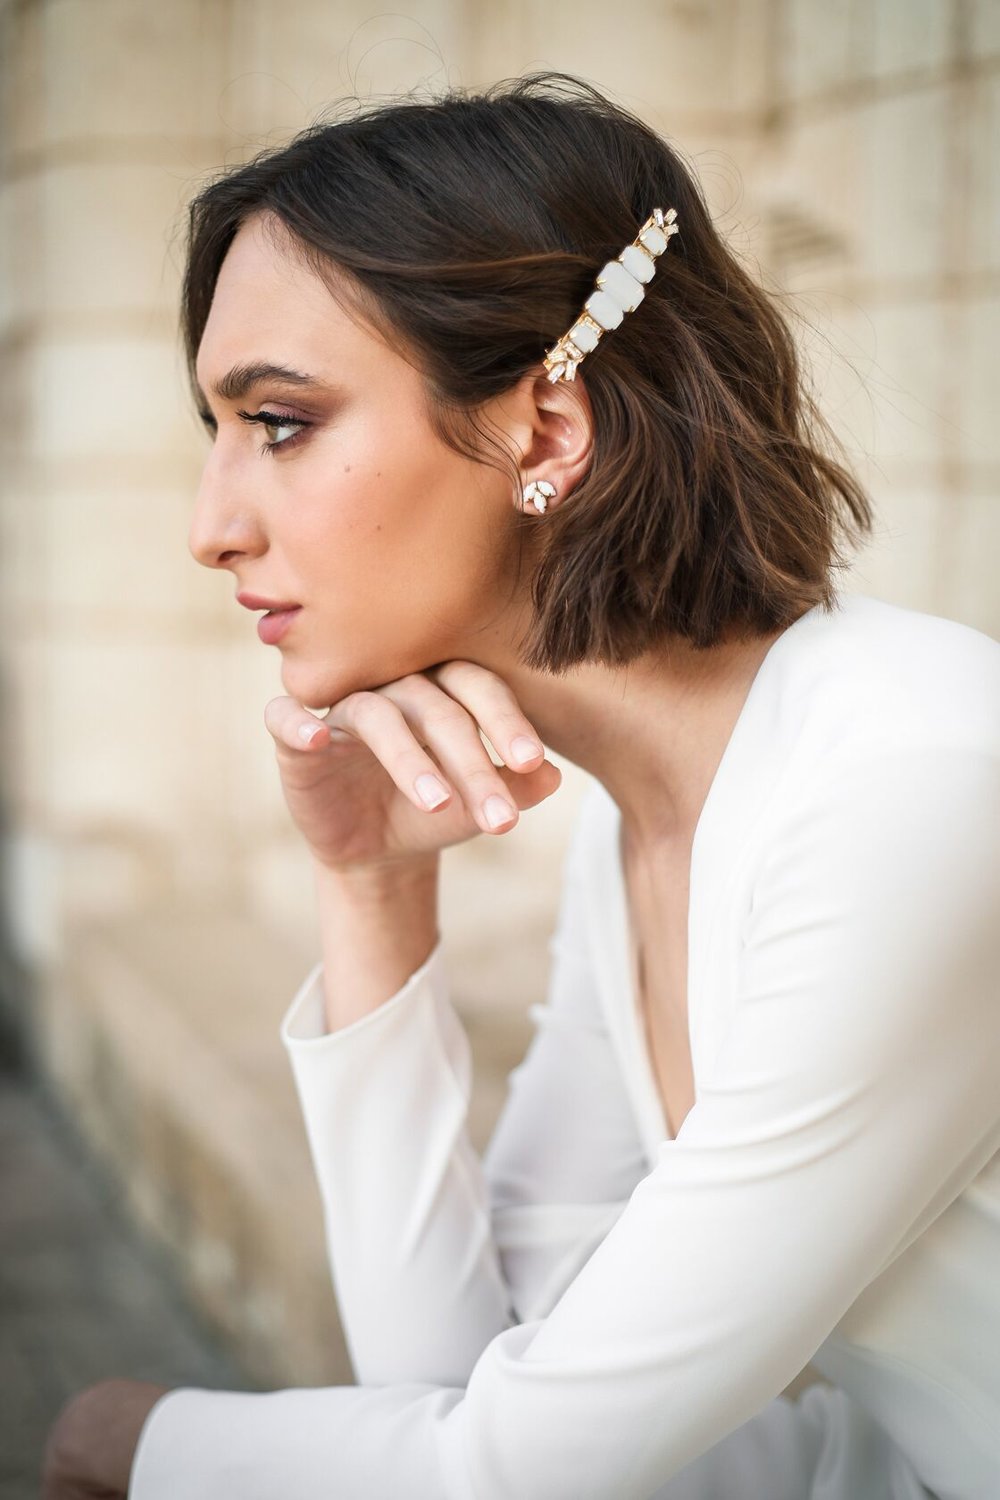 Bride wearing barrette accessory